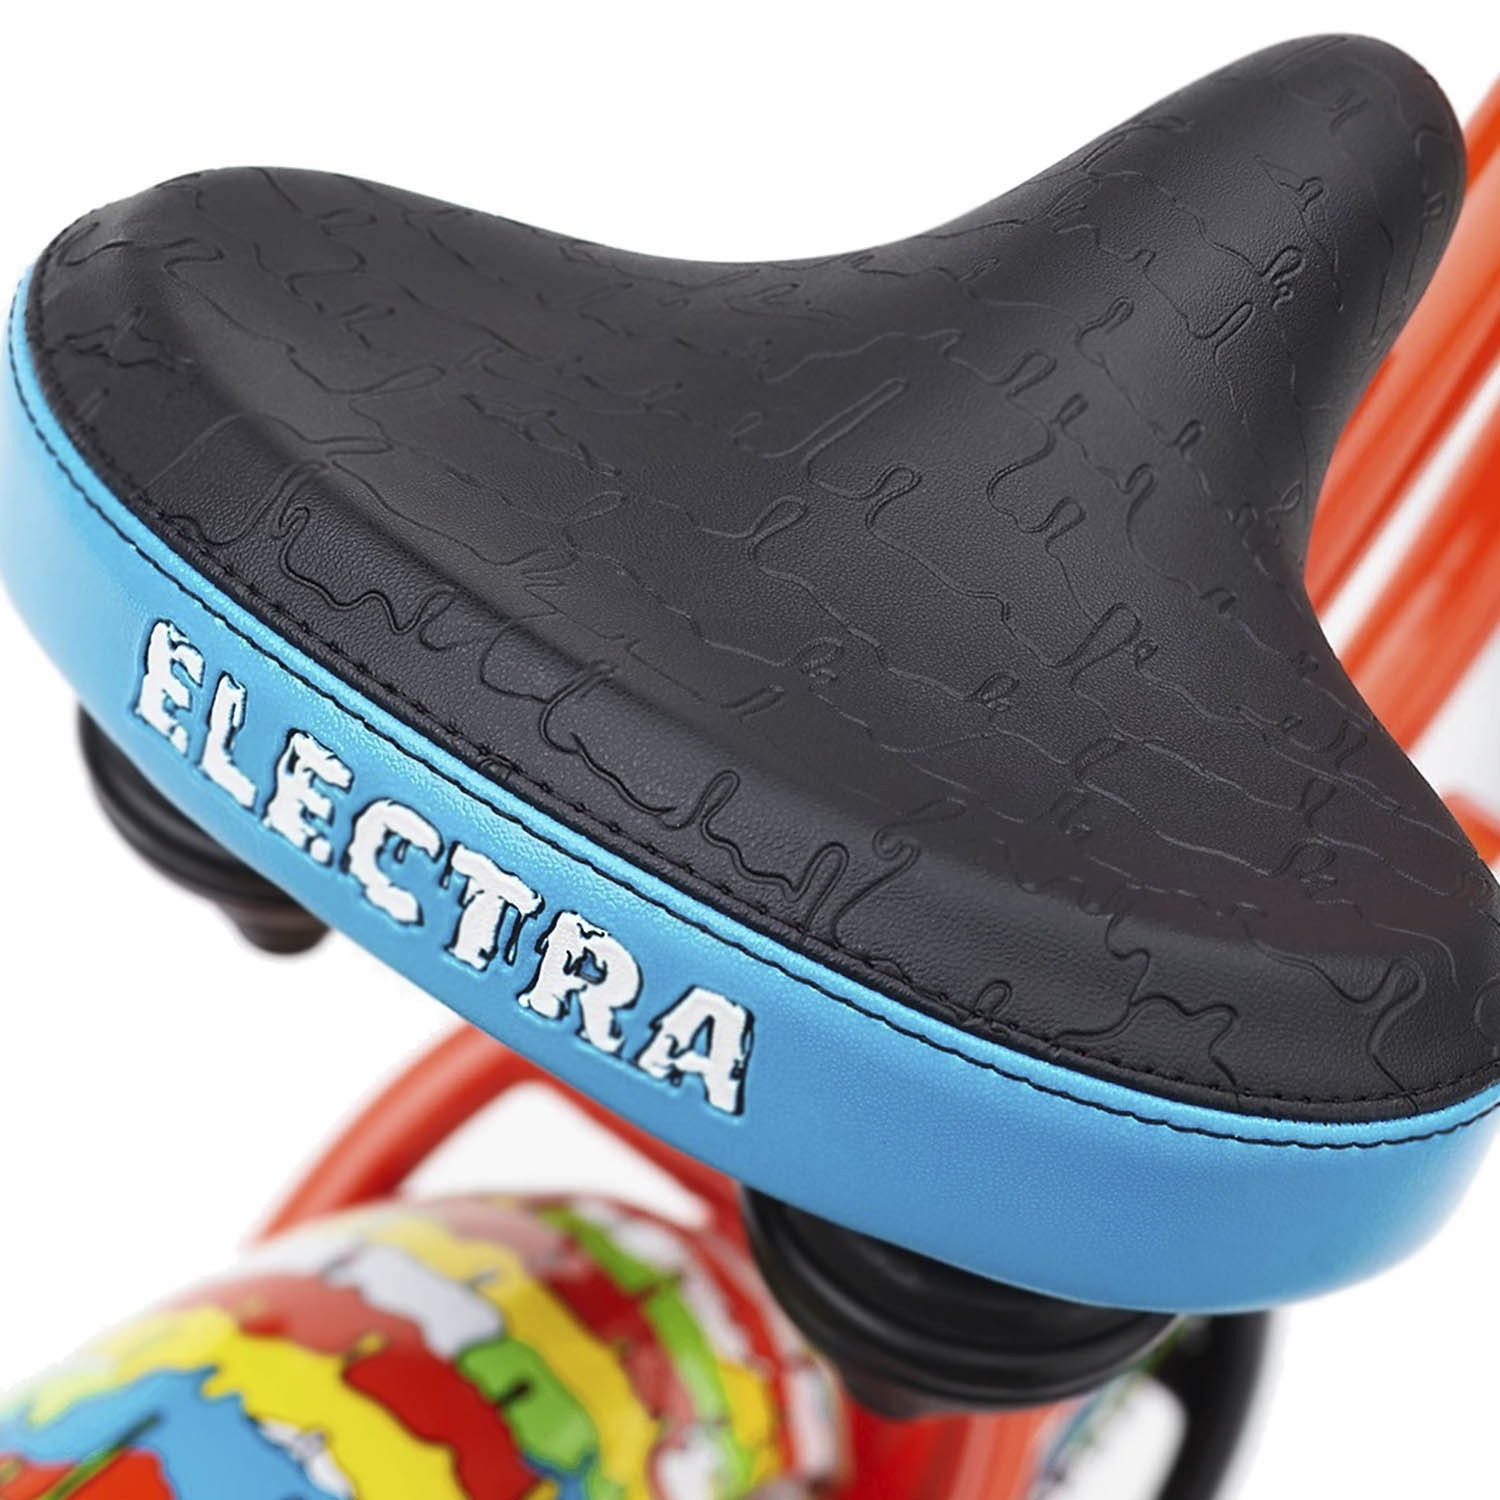 Велосипед Electra Graffiti Drip 1 2022 Orange